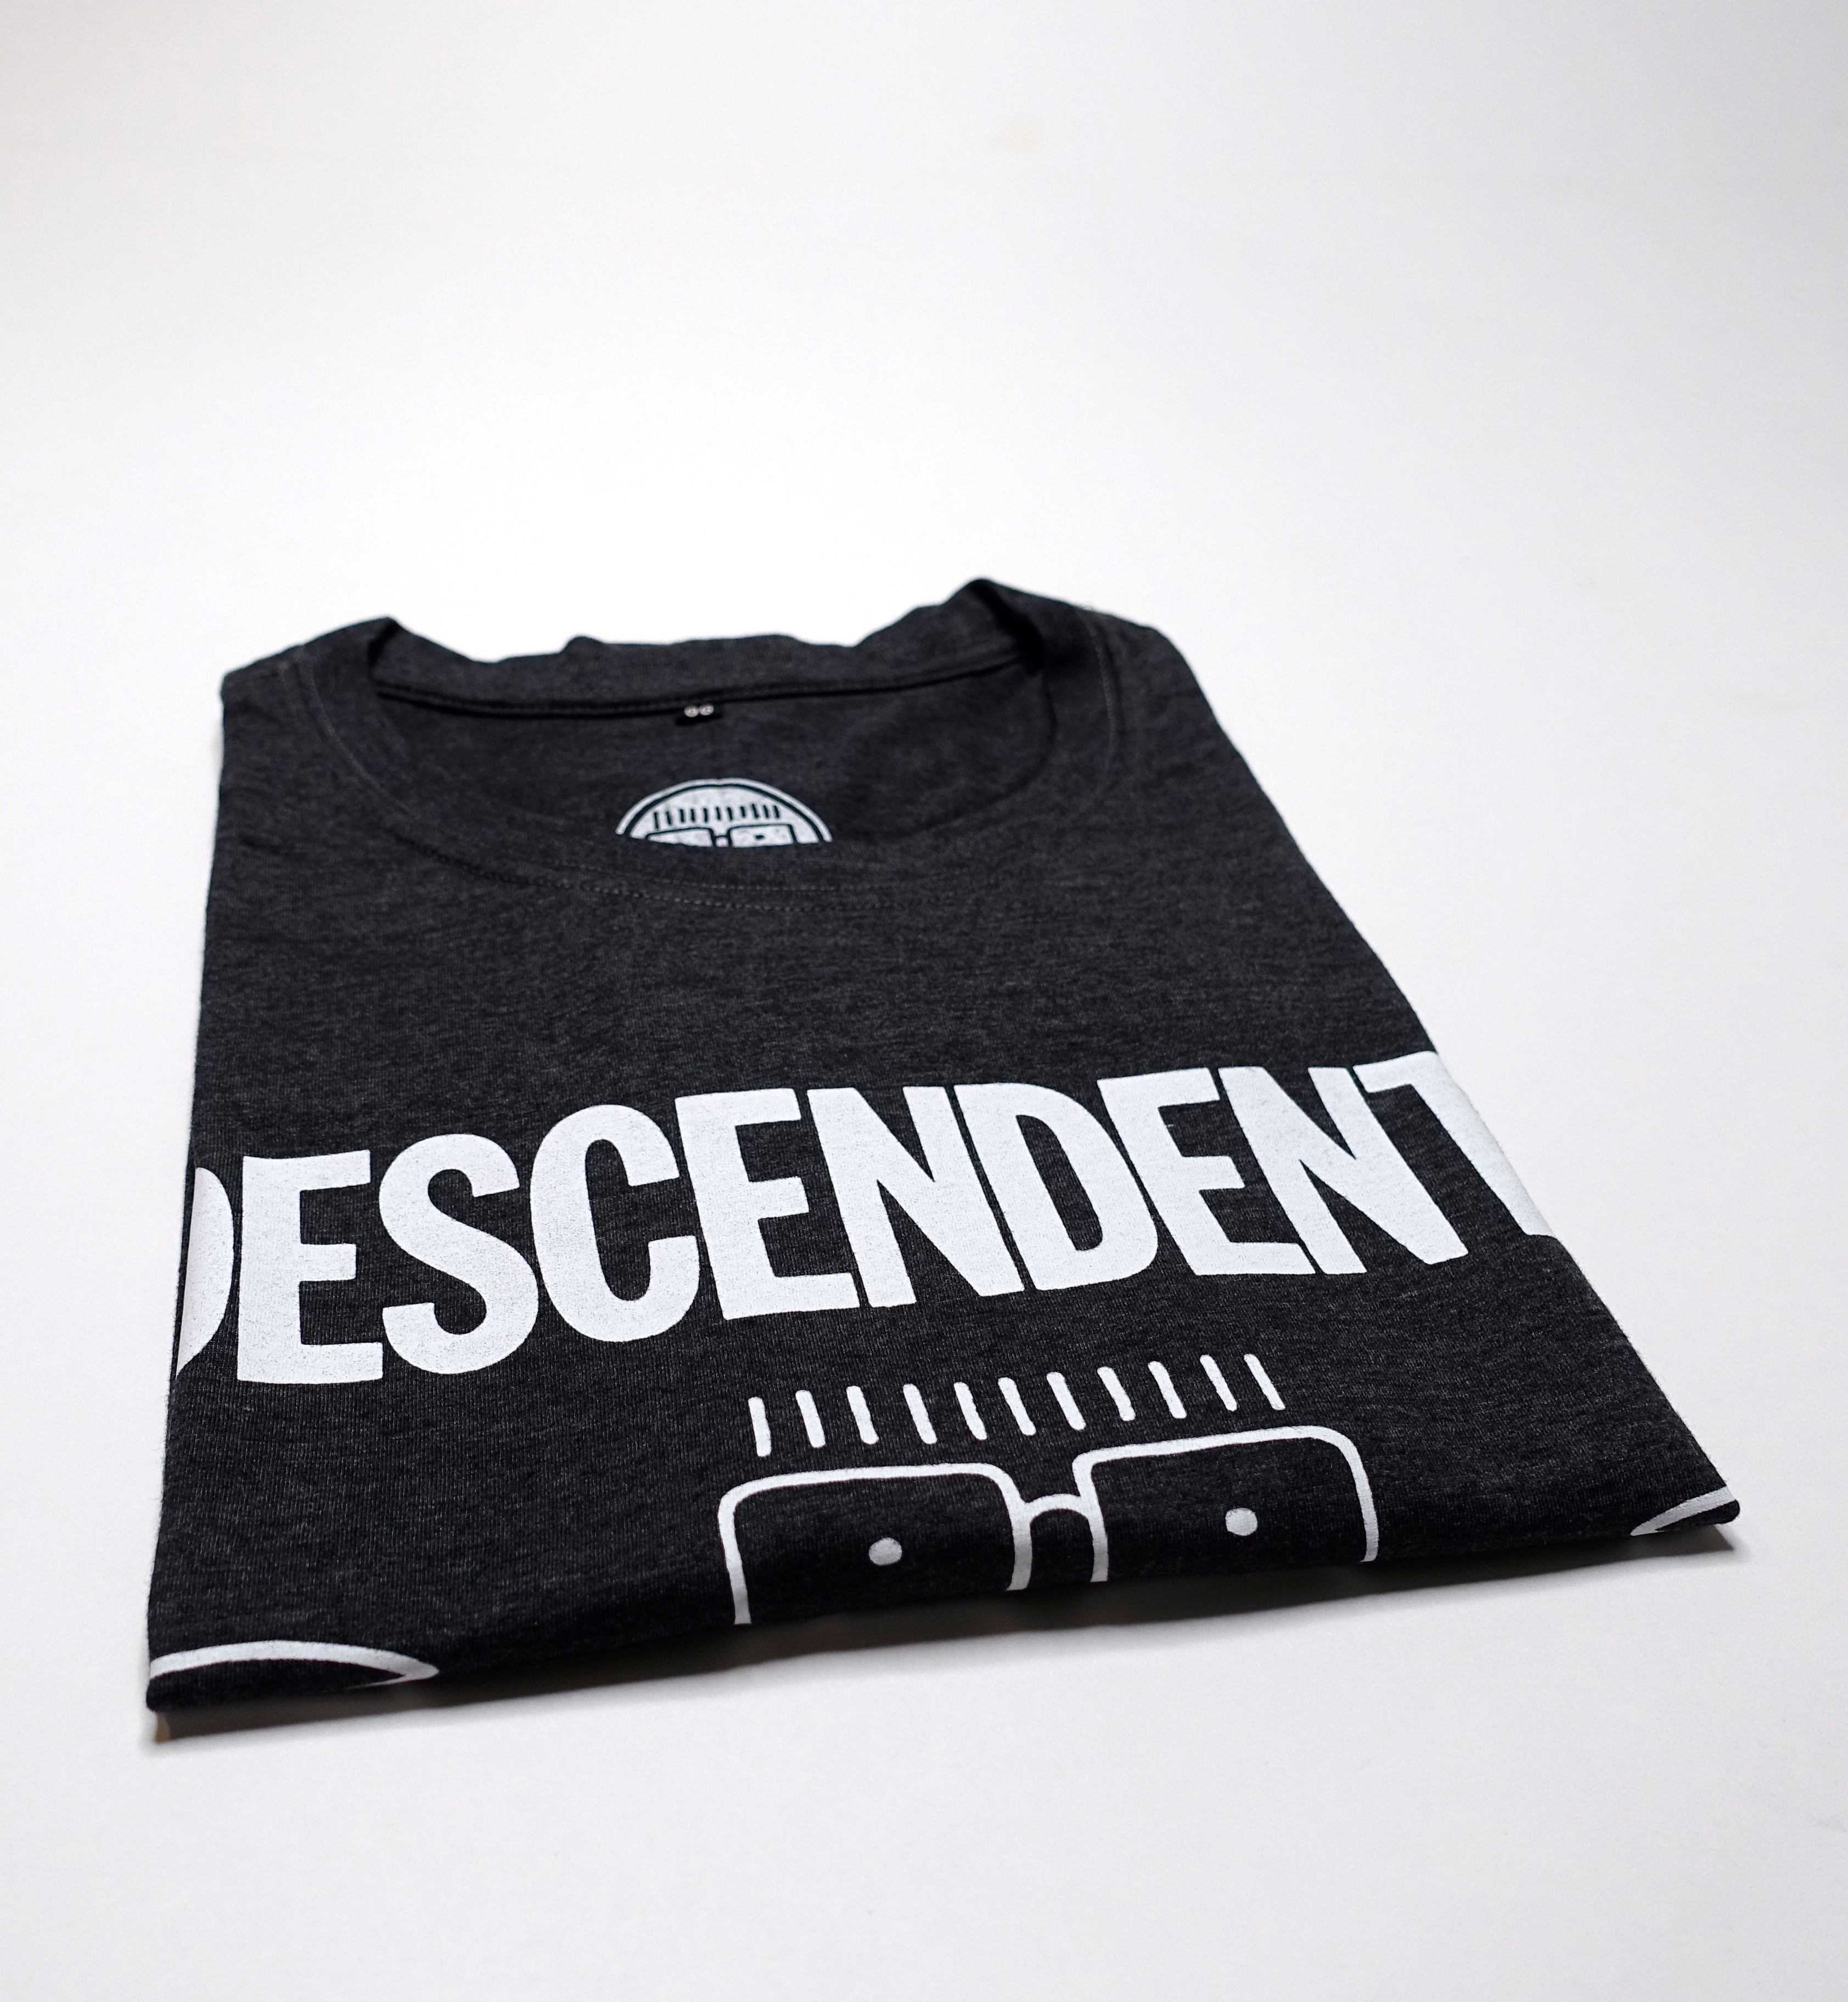 Descendents - Hypercaffium Spazinate 2016 World Tour Shirt (South American Version) Size XL